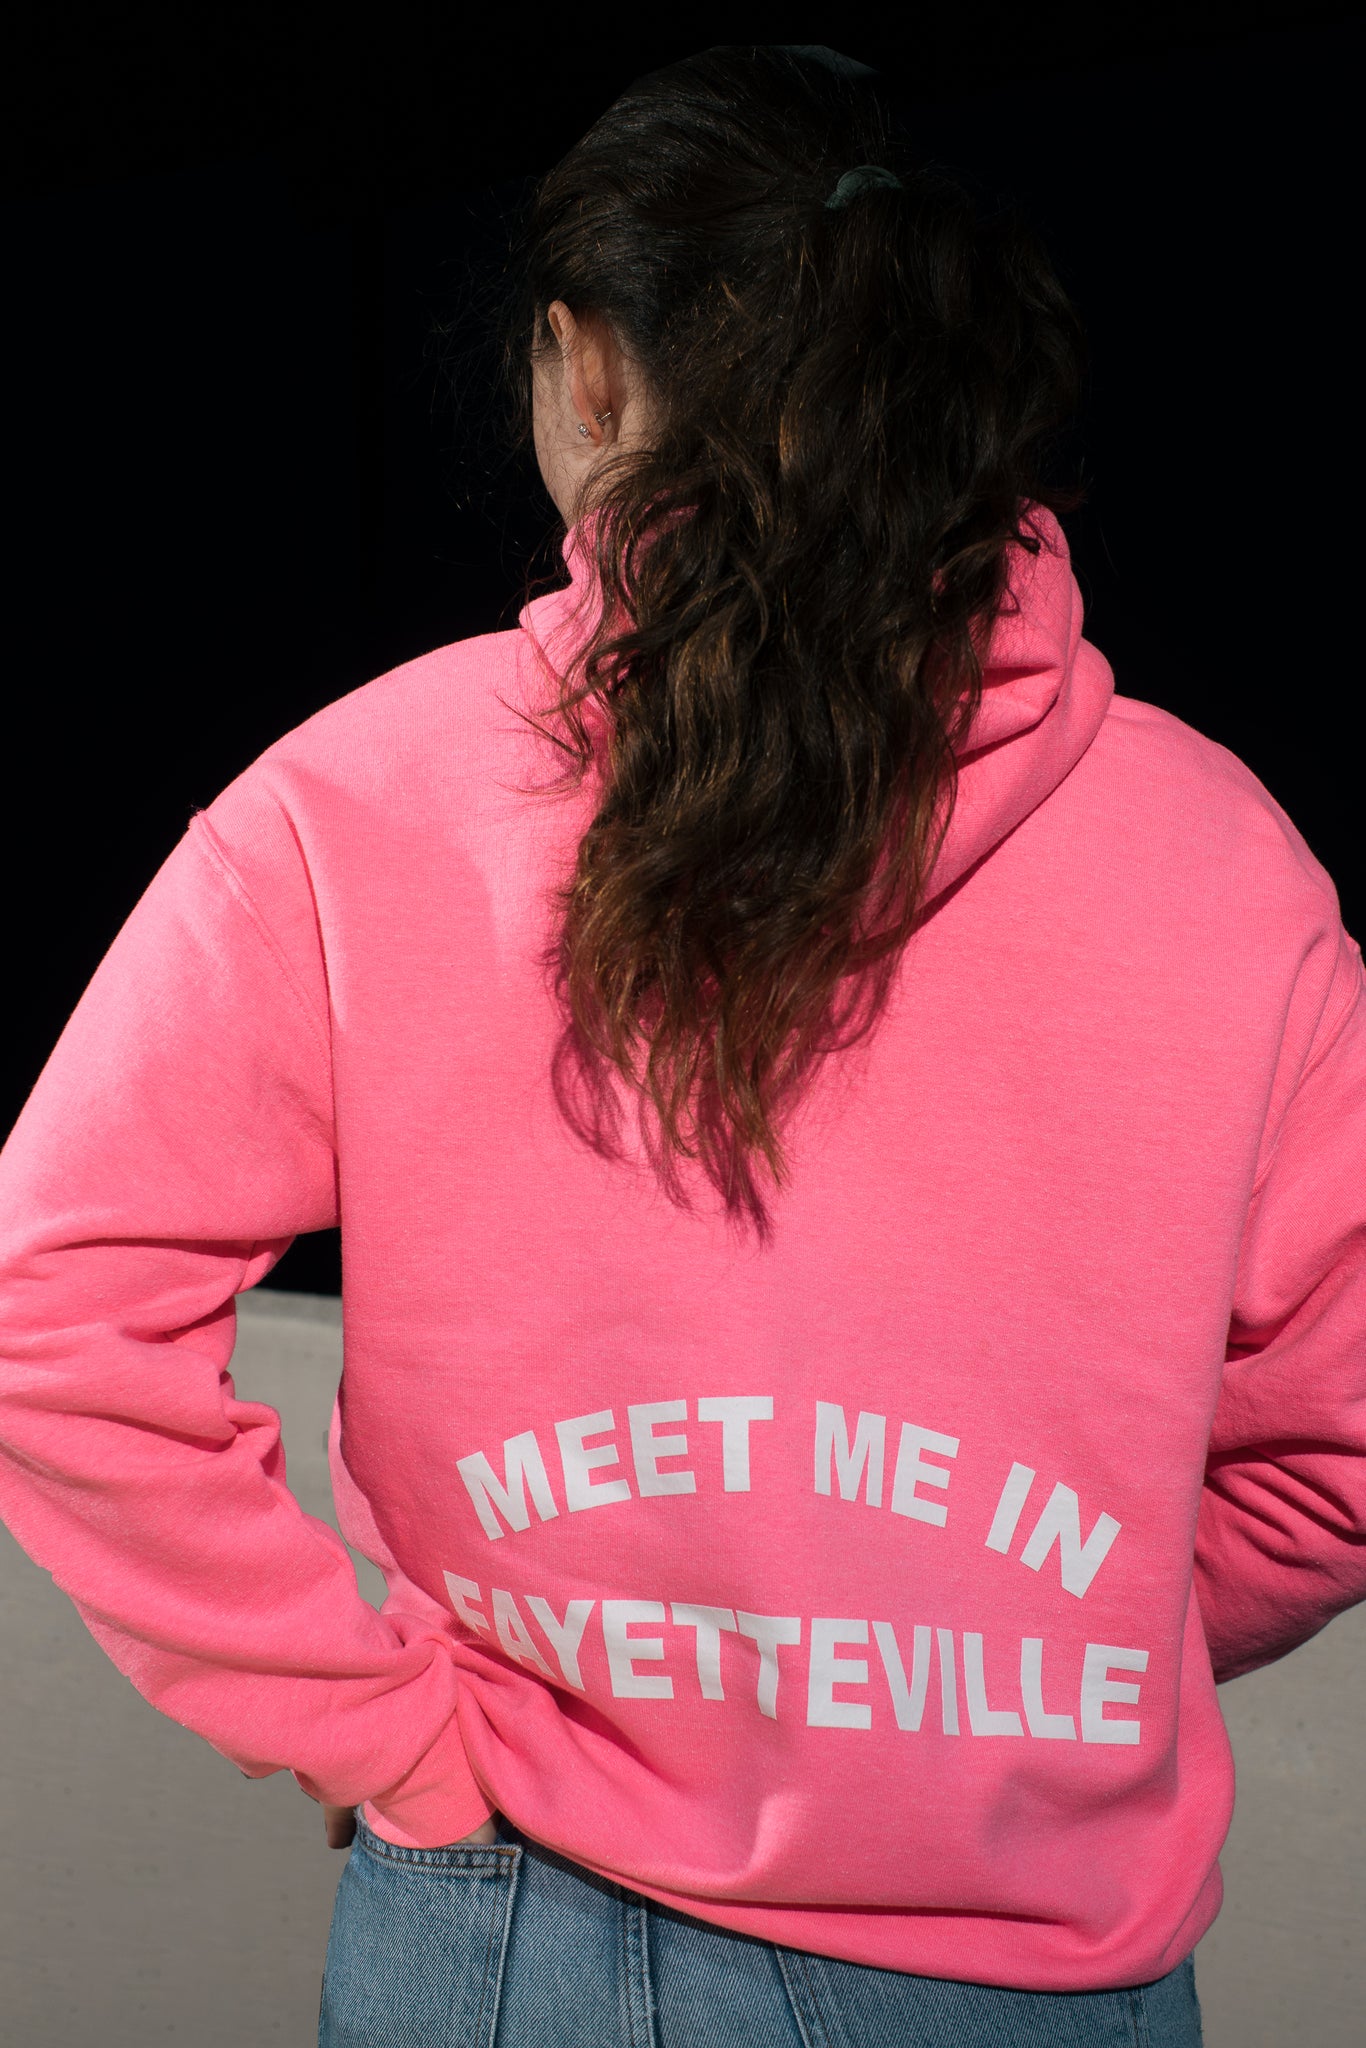 Meet Me In Fayetteville Hoodie- Hot Pink